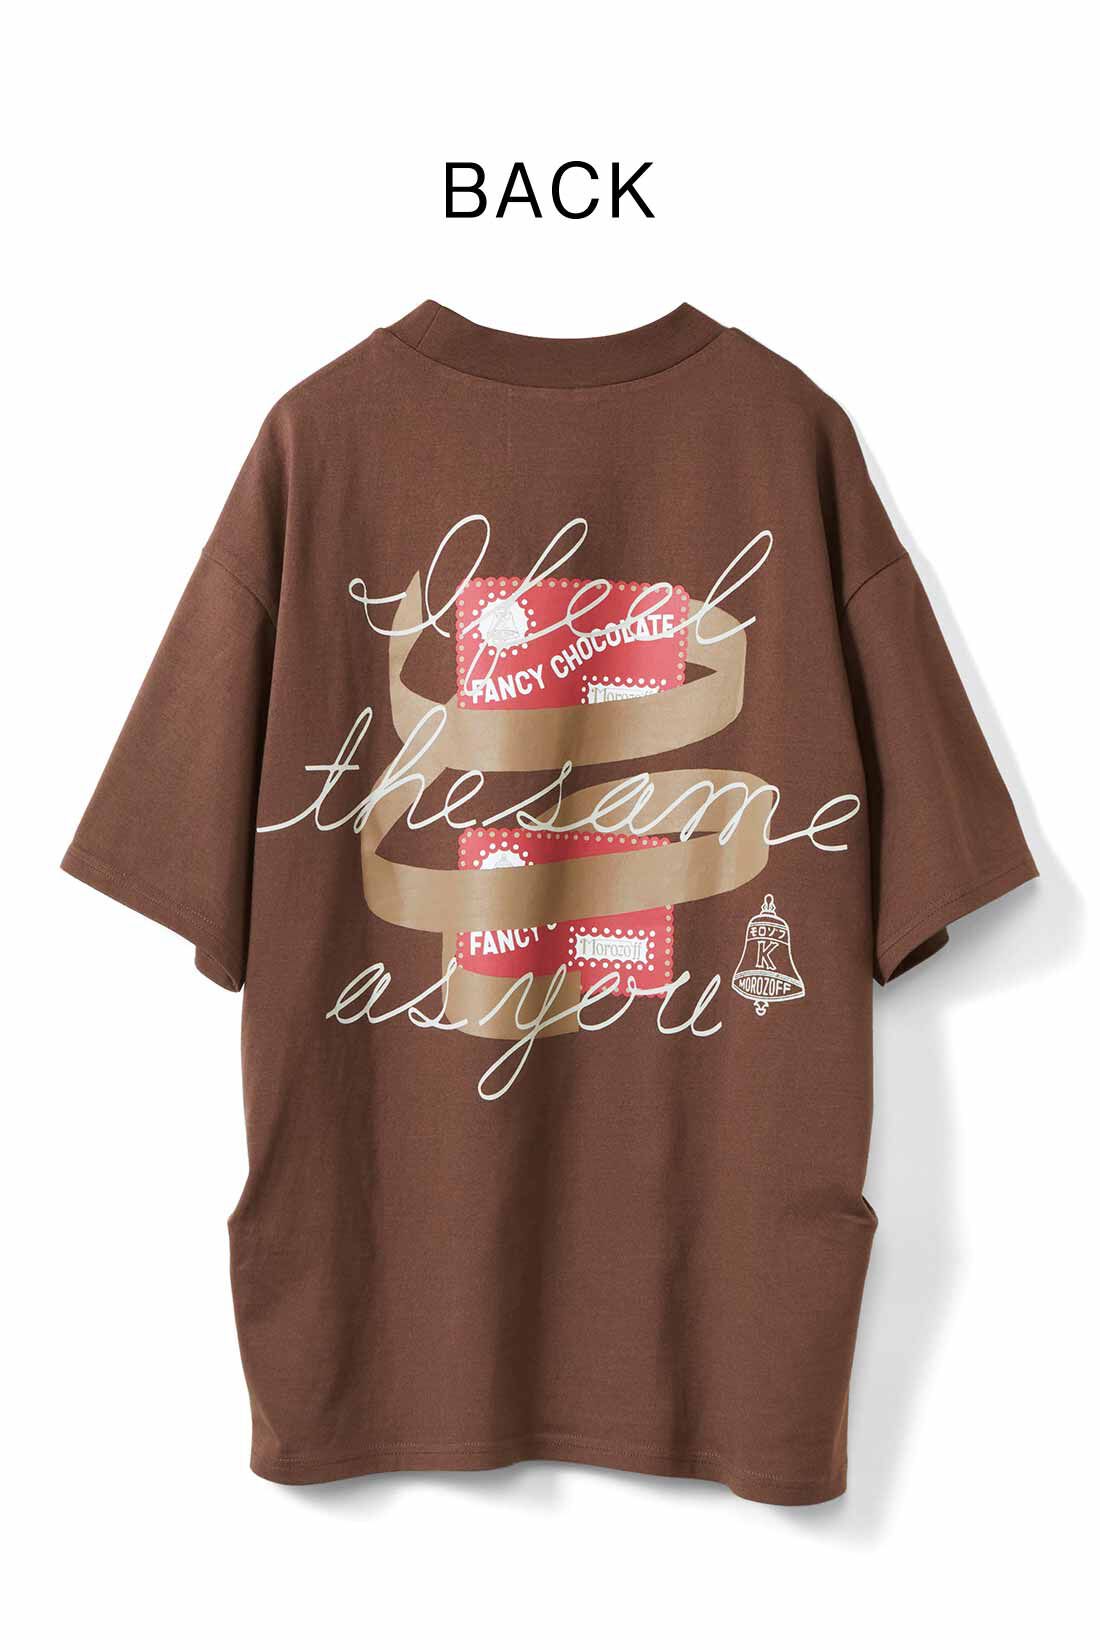 IEDIT|Live love cottonプロジェクト　IEDIT[イディット]　洋菓子のモロゾフコラボ大人な甘さクラシカルチョコレートパッケージプリントTシャツ〈チョコレートブラウン〉